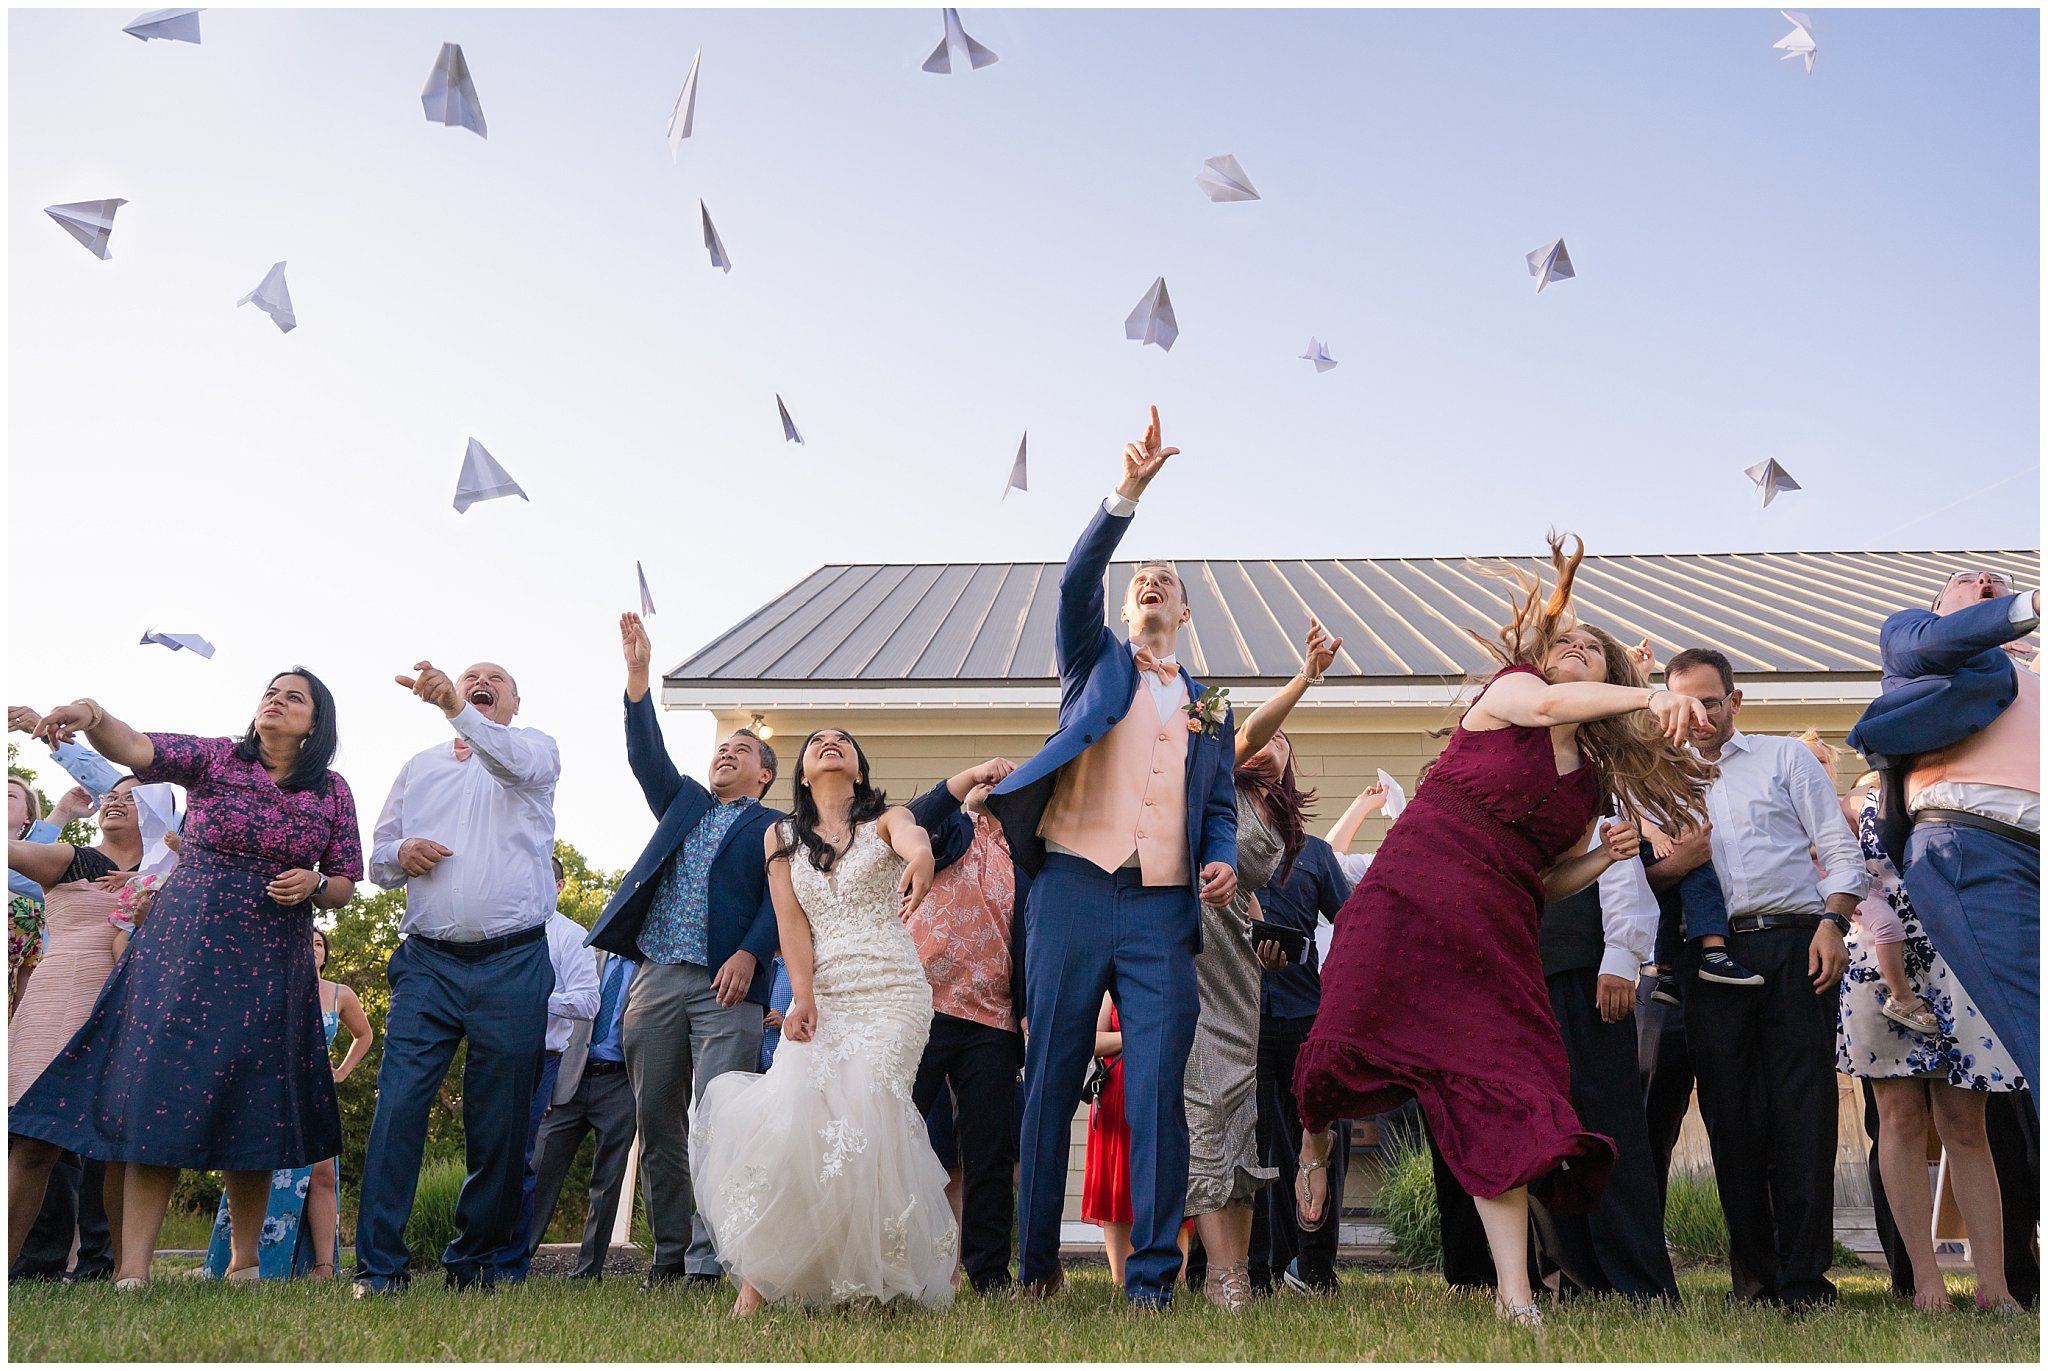 Paper airplane contest during wedding | Oak Hills Utah Destination Wedding | Jessie and Dallin Photography